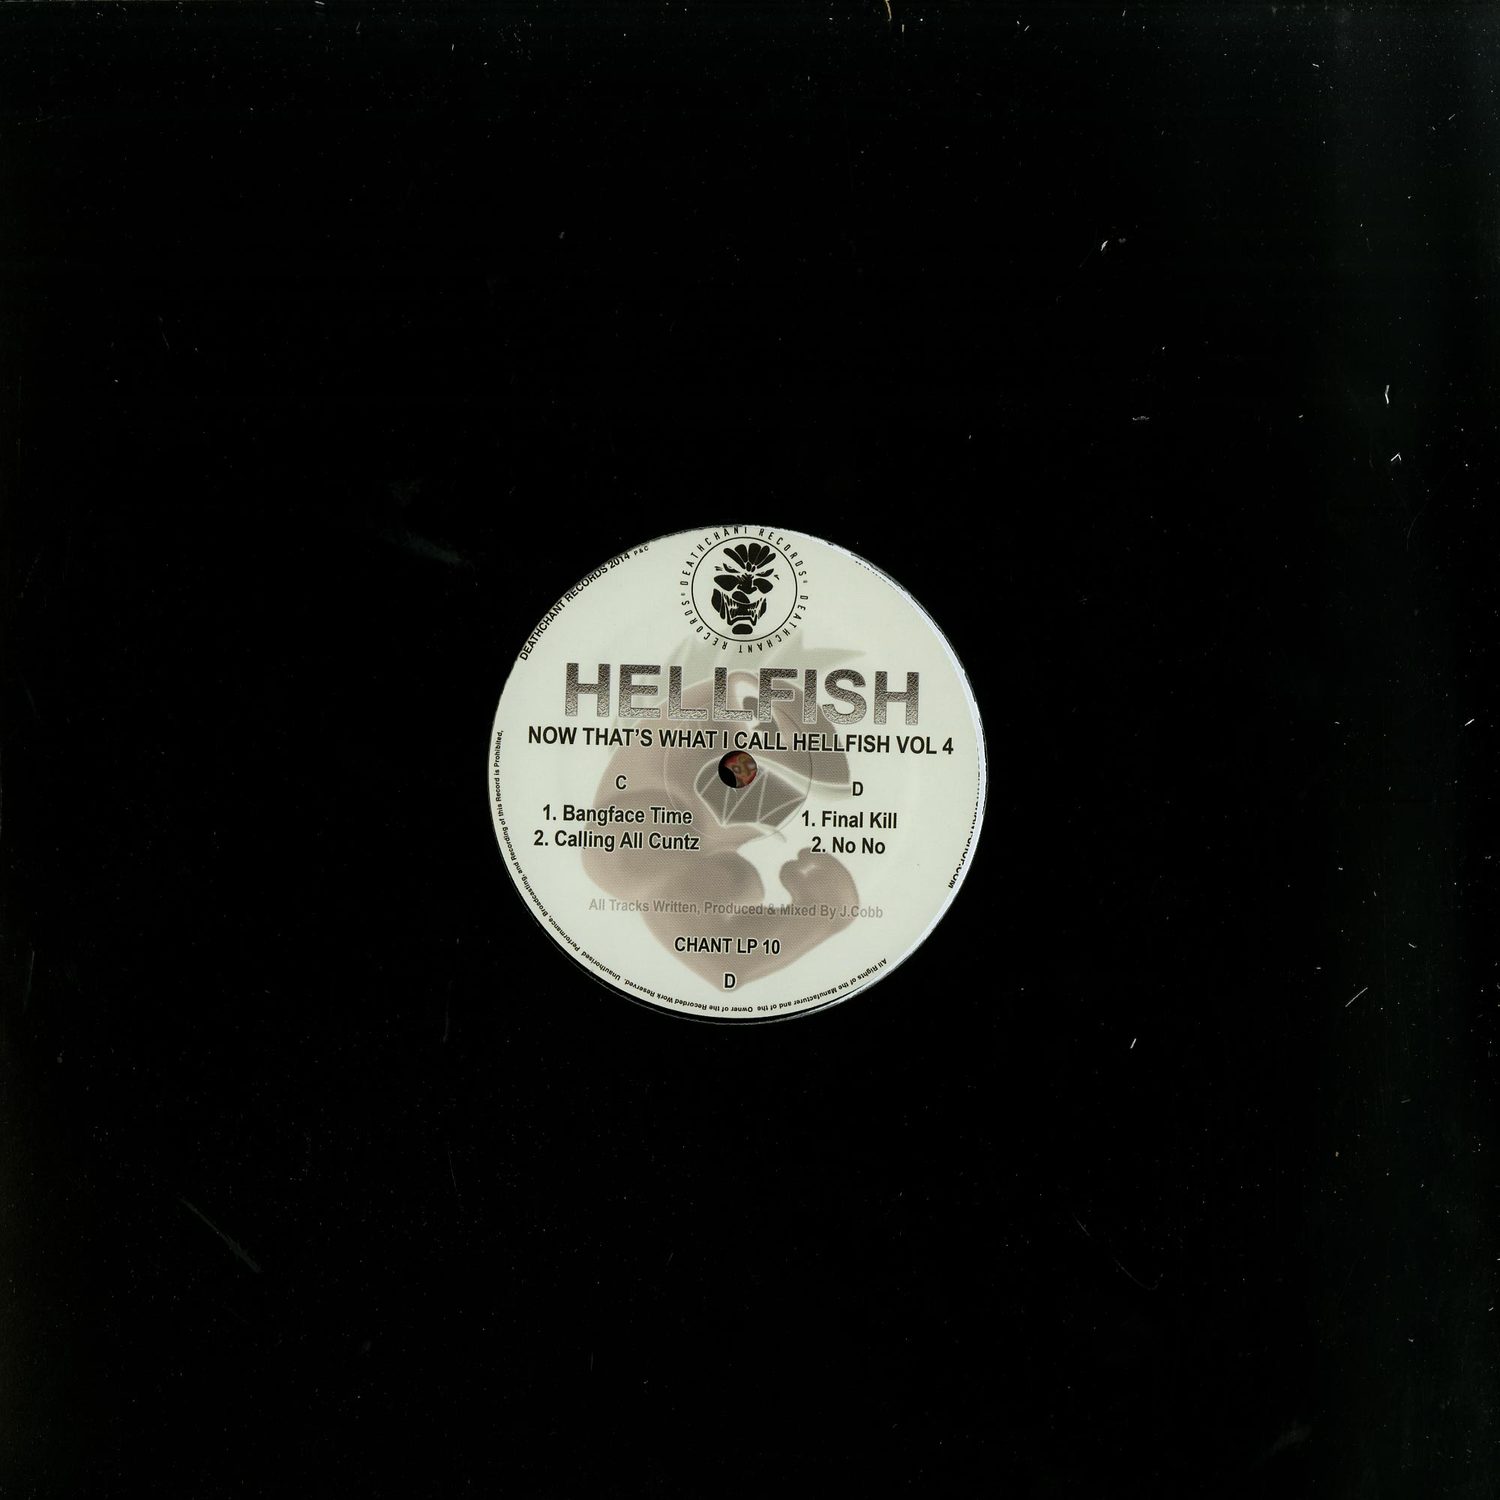 Hellfish - OW THATS WHAT I CALL HELLFISH VOL 4 